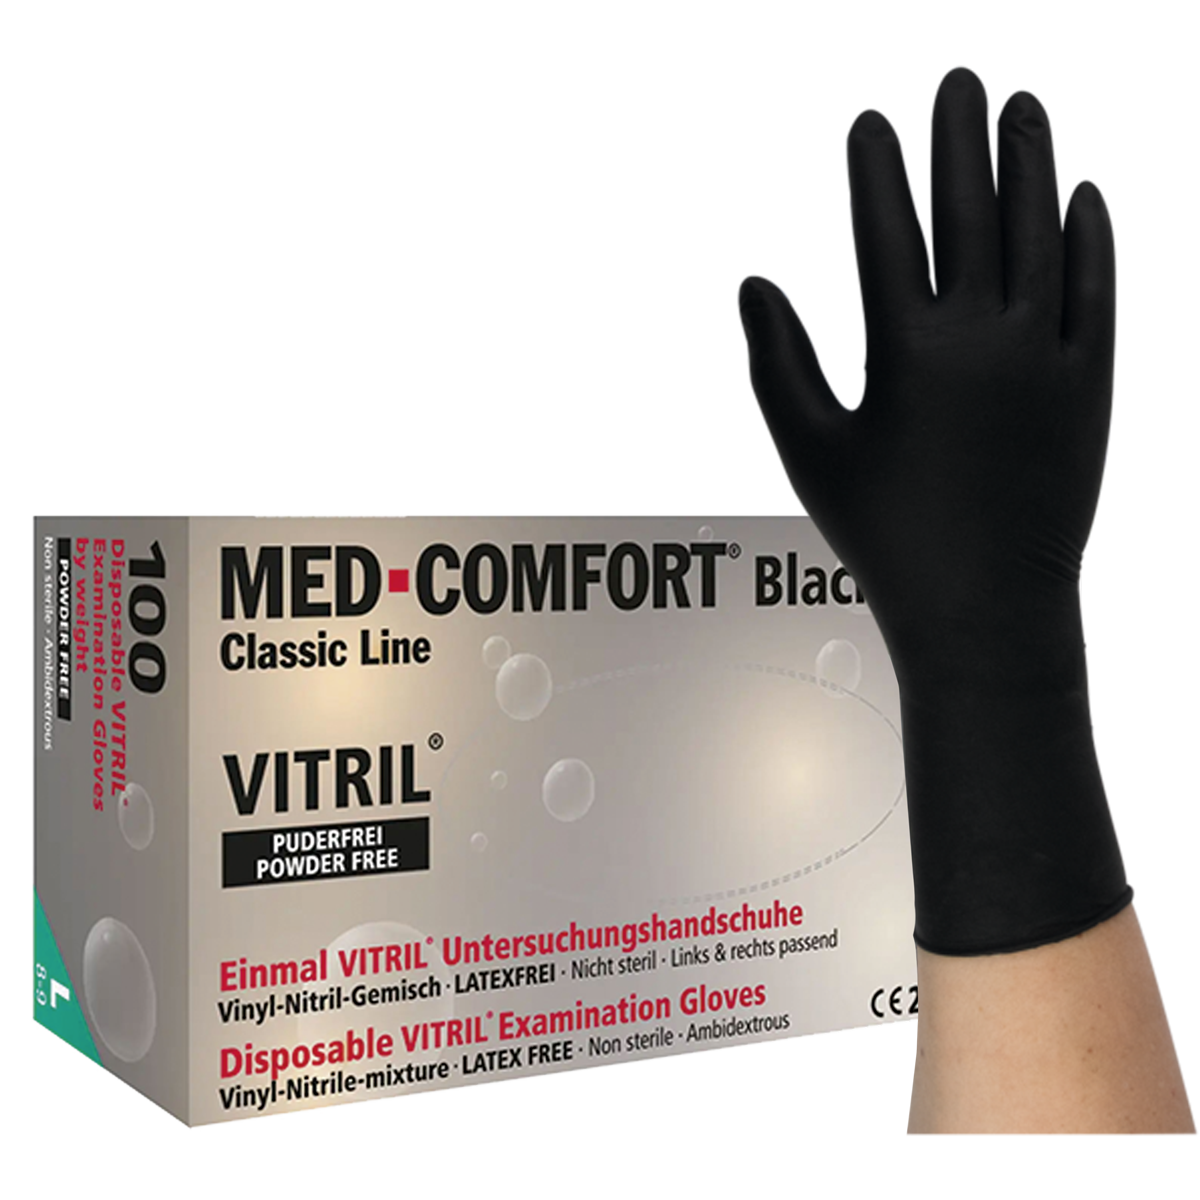 MED-COMFORT Black Vitril – Vitrilhandschuhe schwarz, puderfrei, 100 Stück (01252)